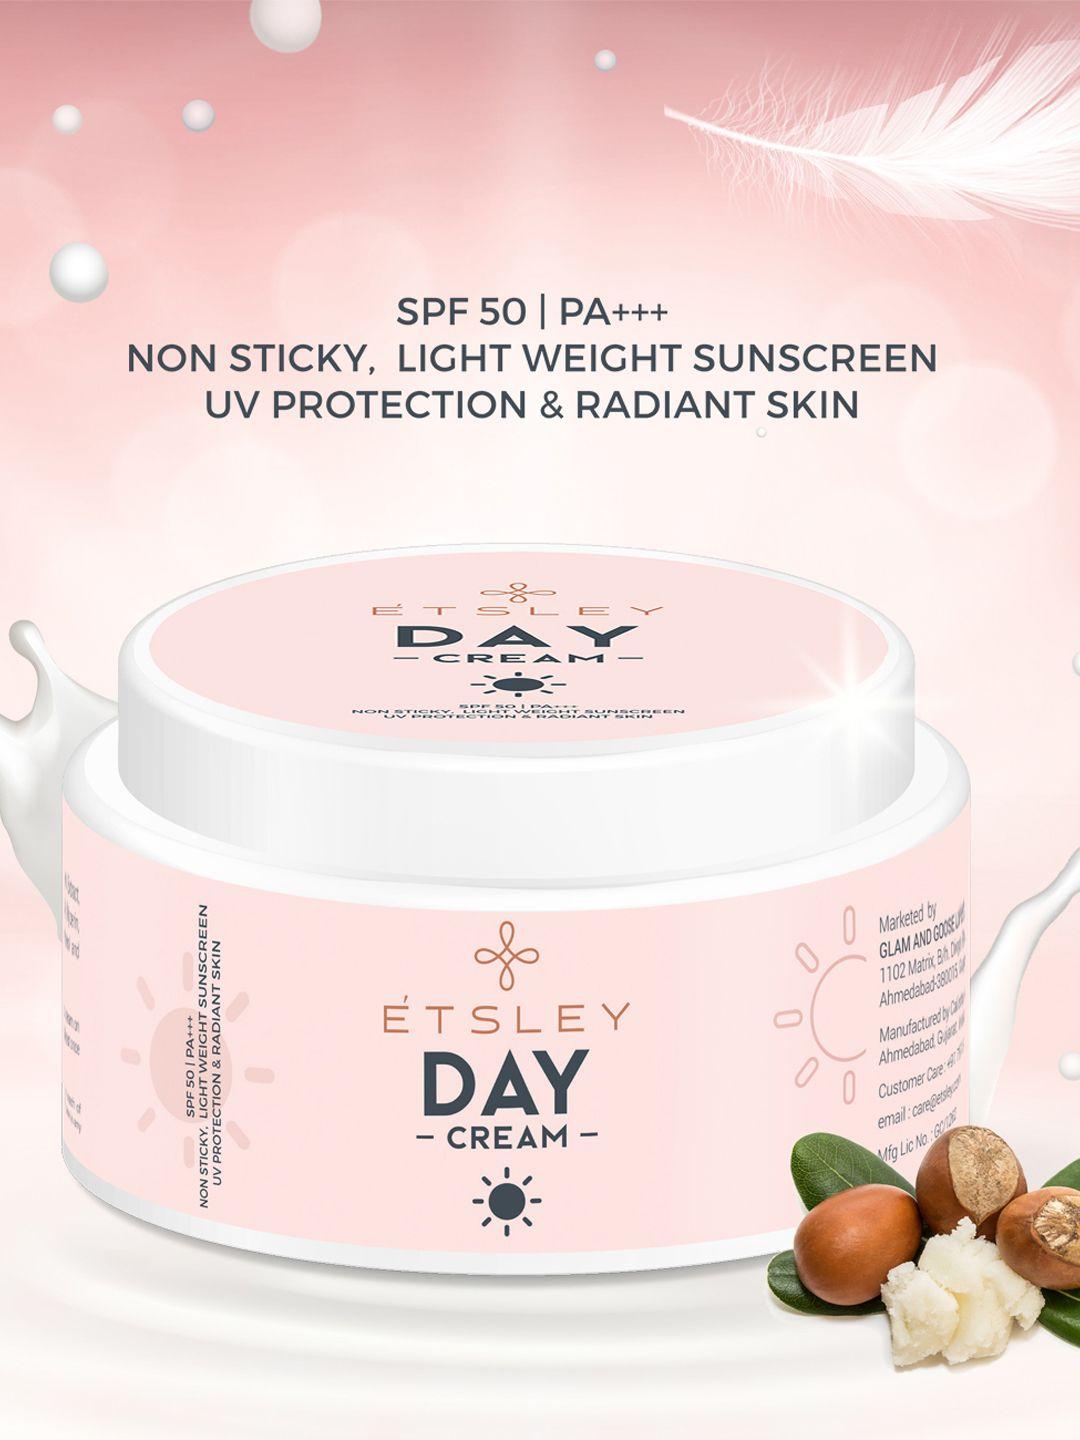 etsley natural day cream-uv protection & radiance skin|spf 50 pa+++ sunscreen 50gm